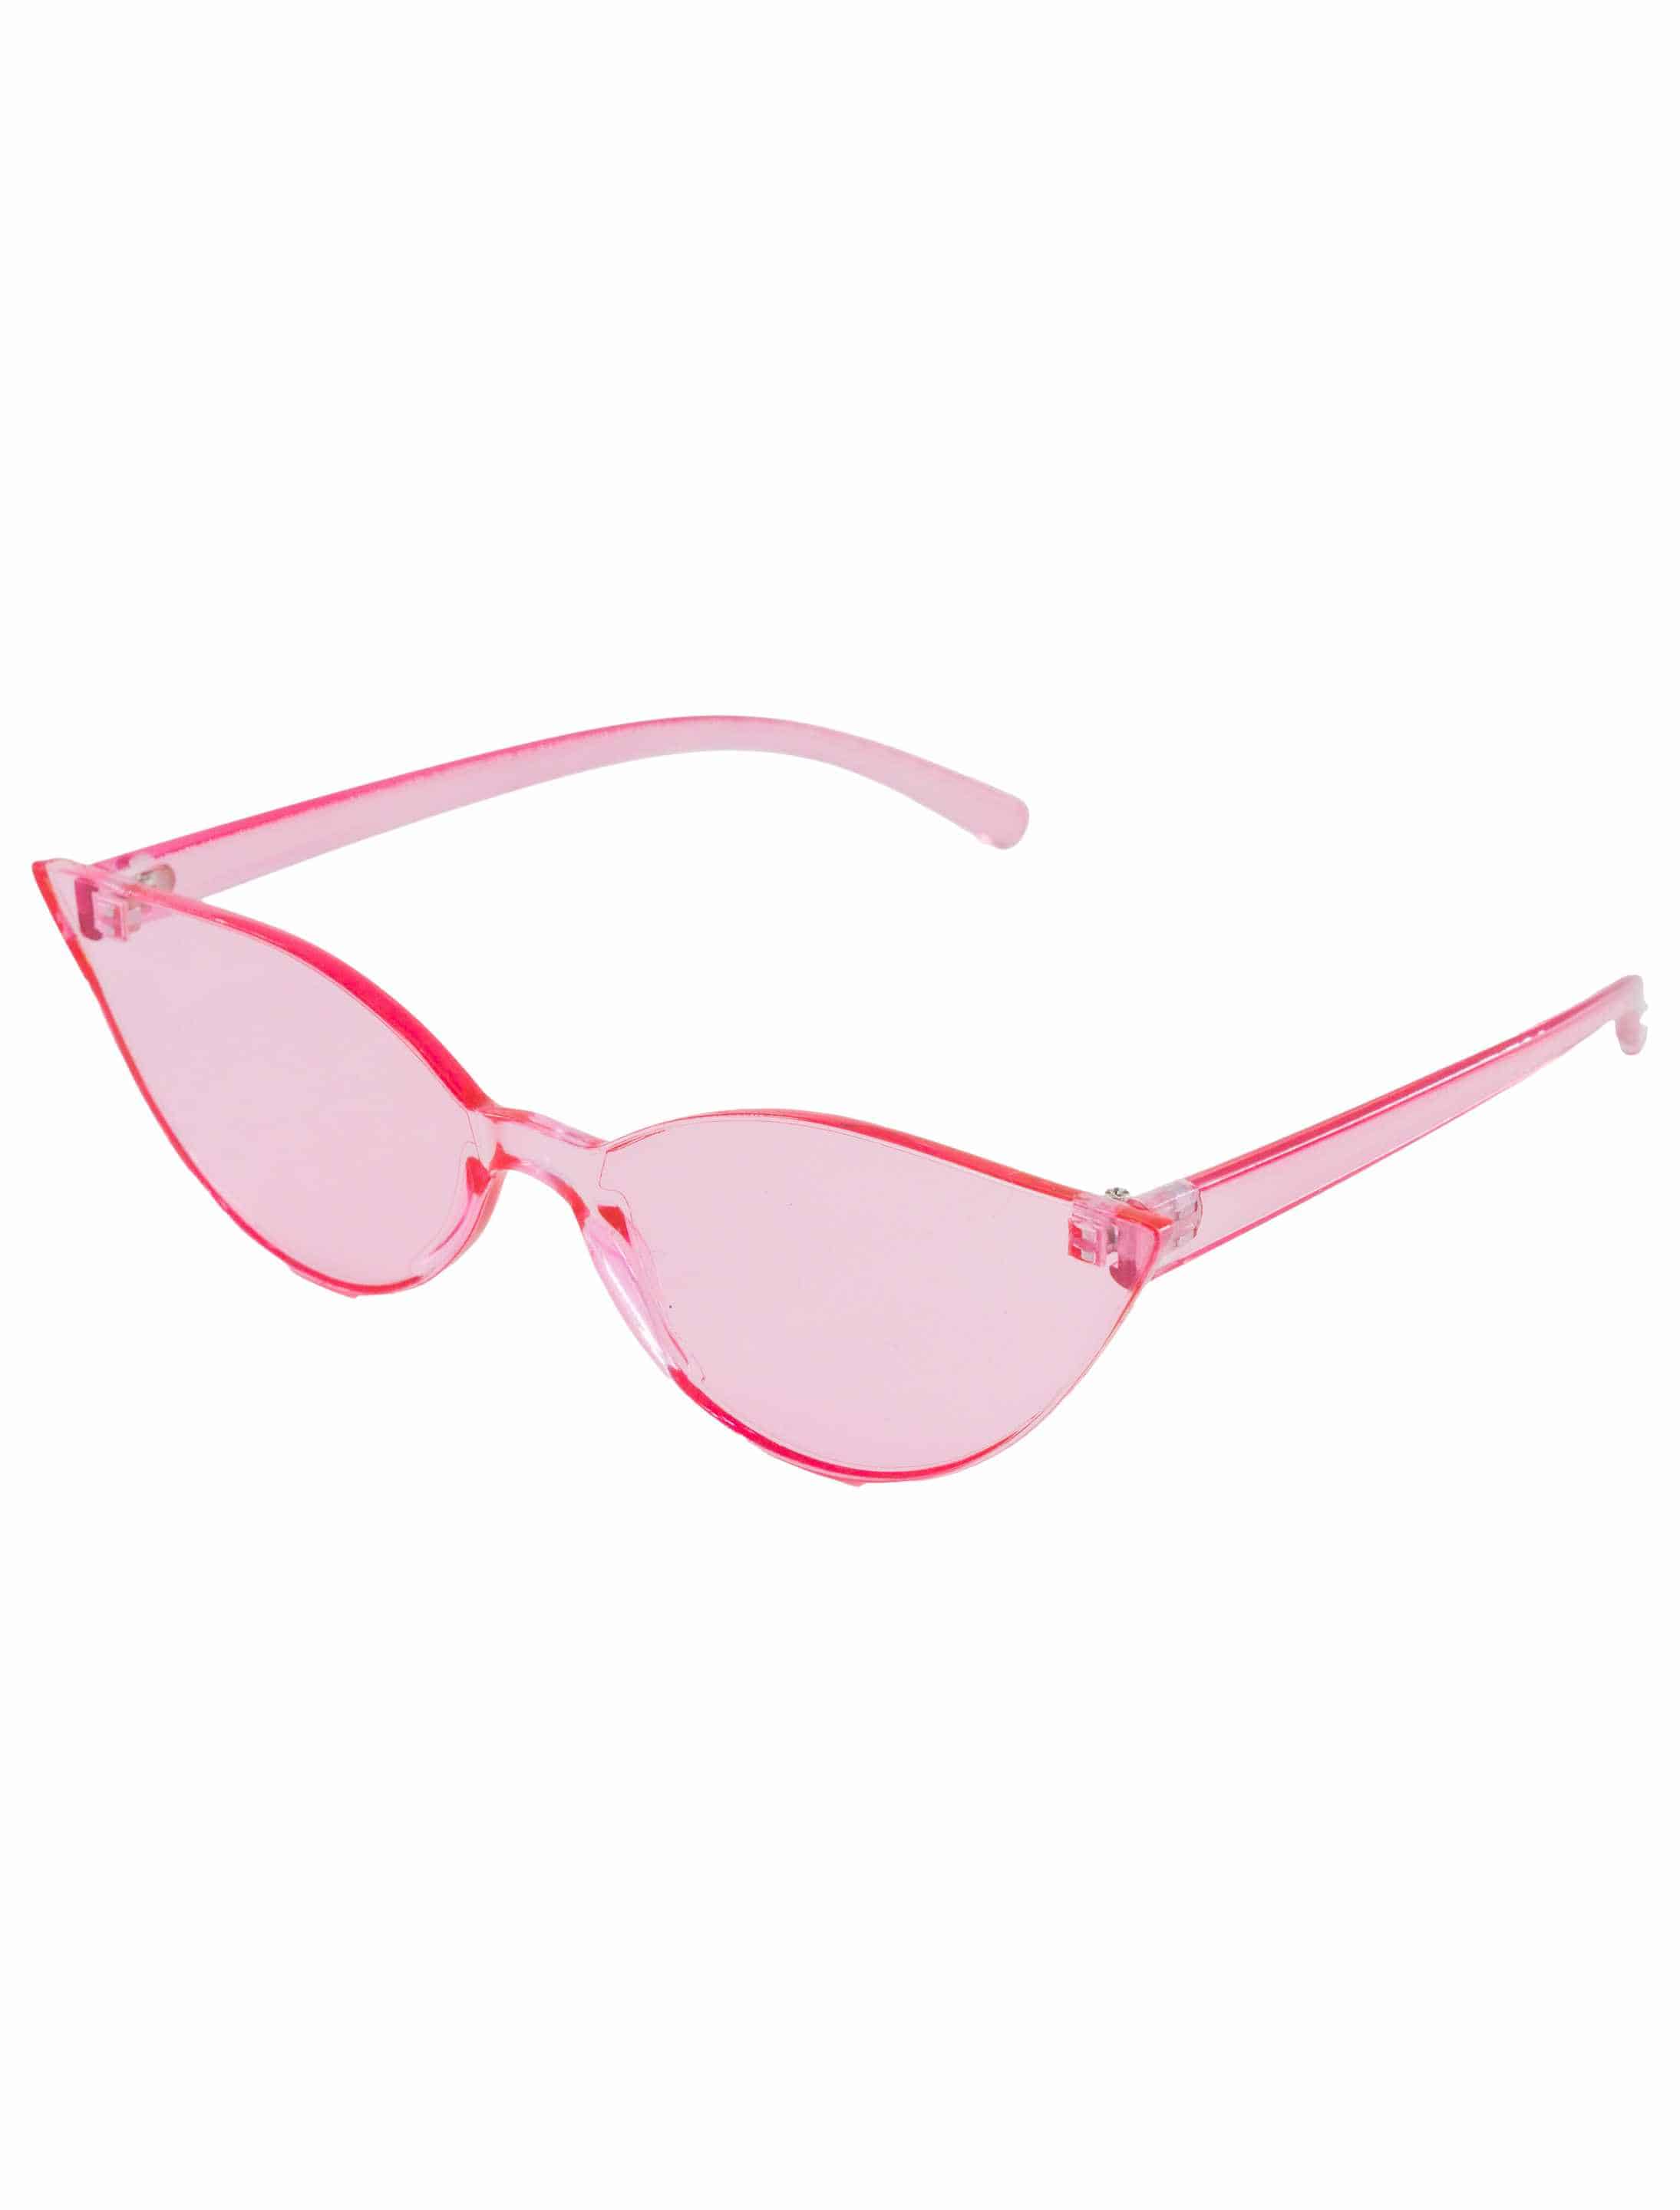 Brille Cat Eye transparent pink